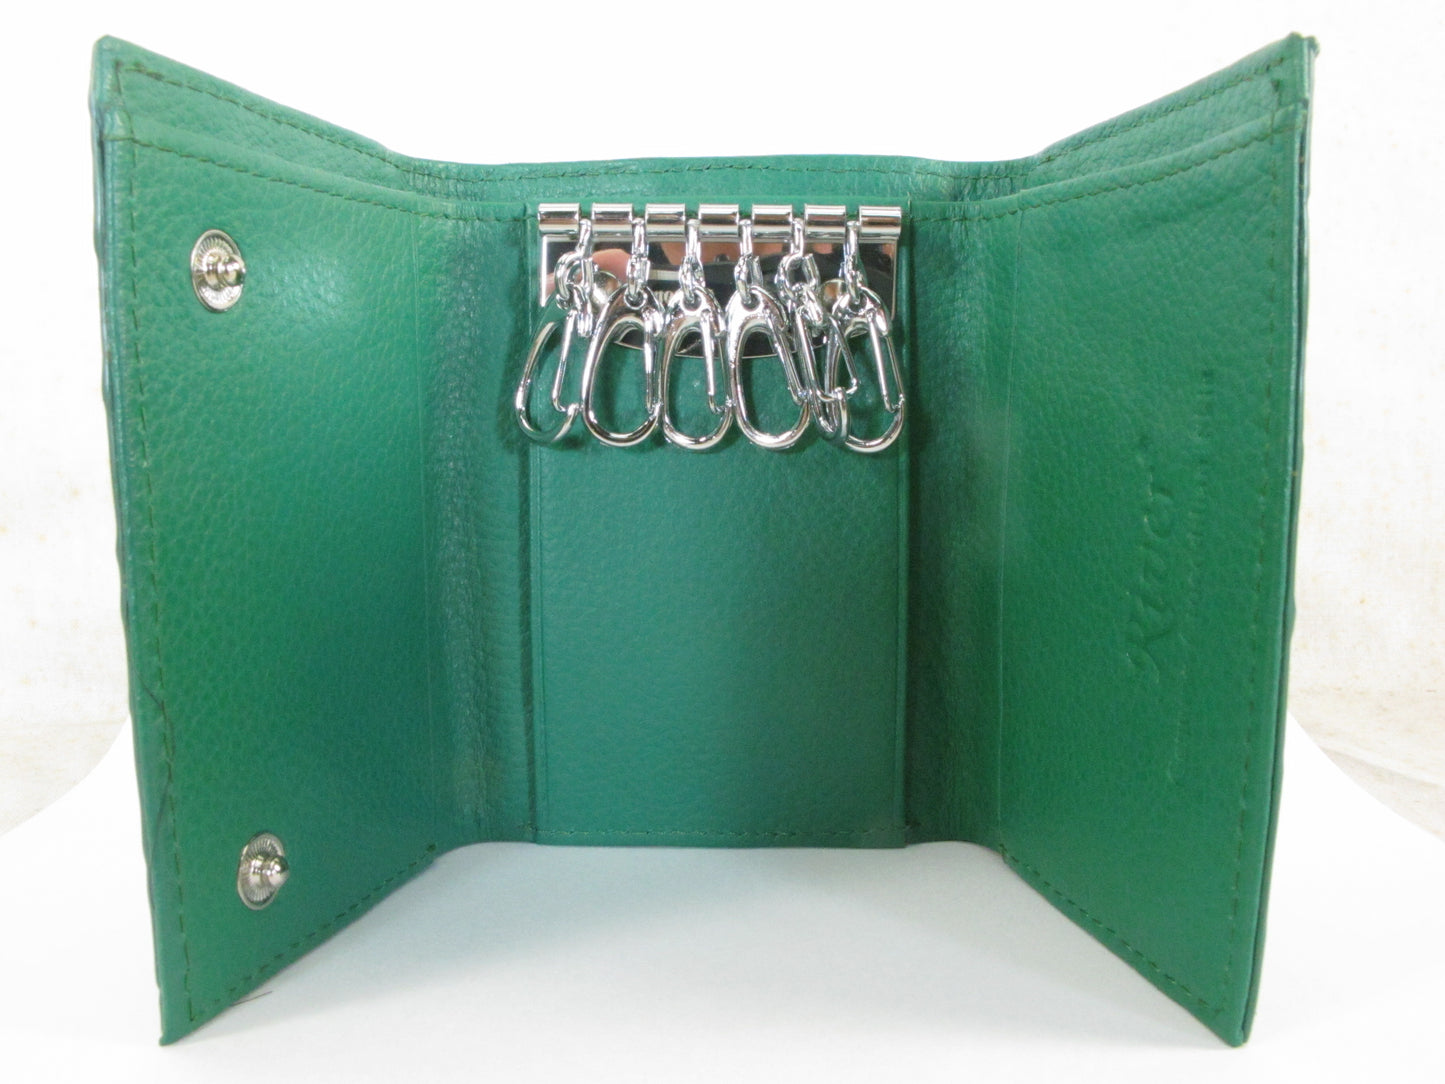 Genuine Caiman Crocodile Skin Leather Trifold Key Holder Wallet